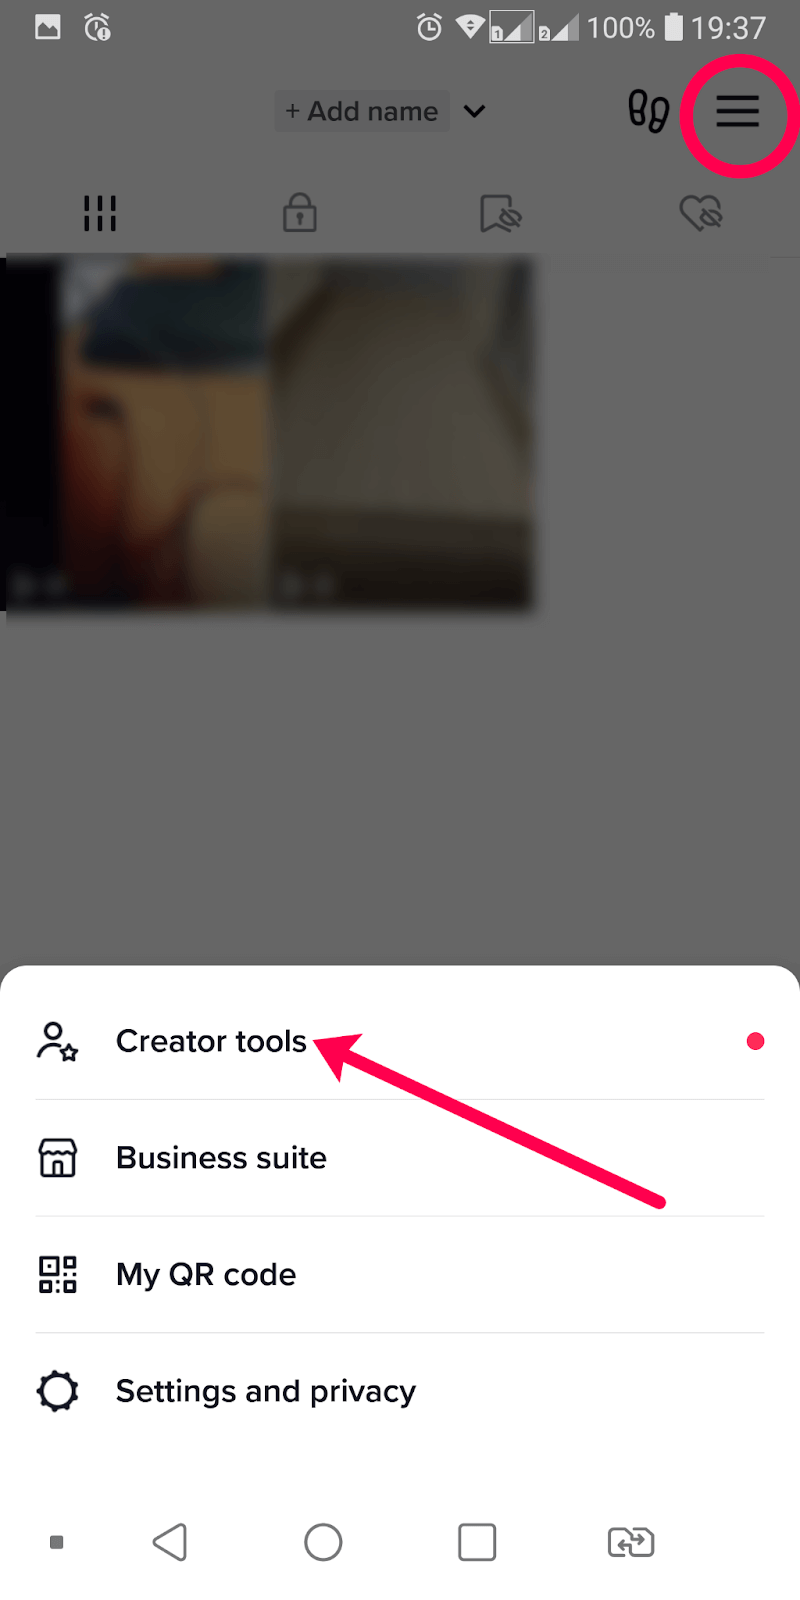 Select creator tools